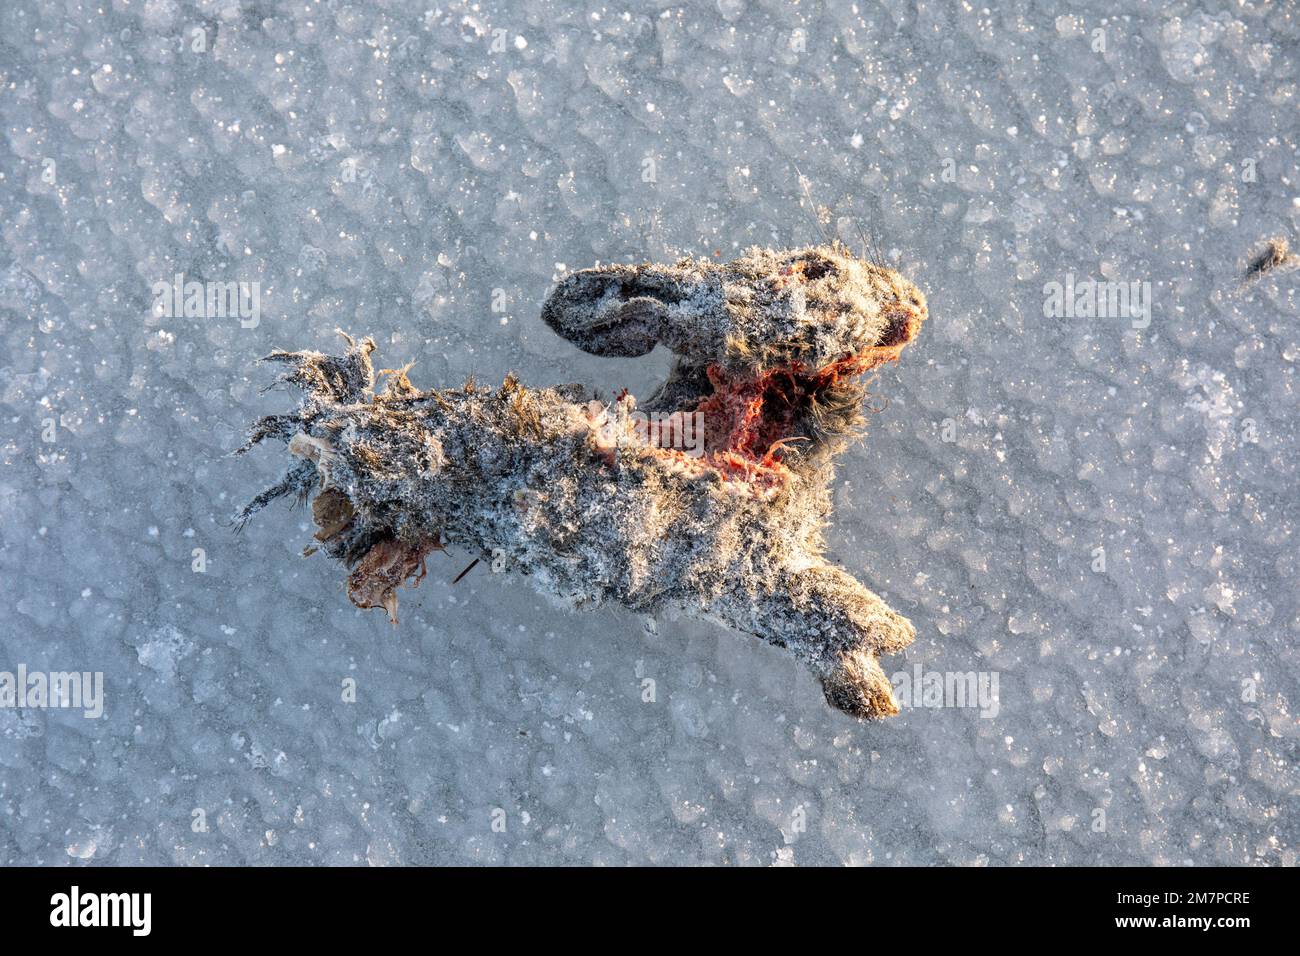 Frozen and partly eaten juvenile European rabbit or Oryctolagus cuniculus on ice Stock Photo